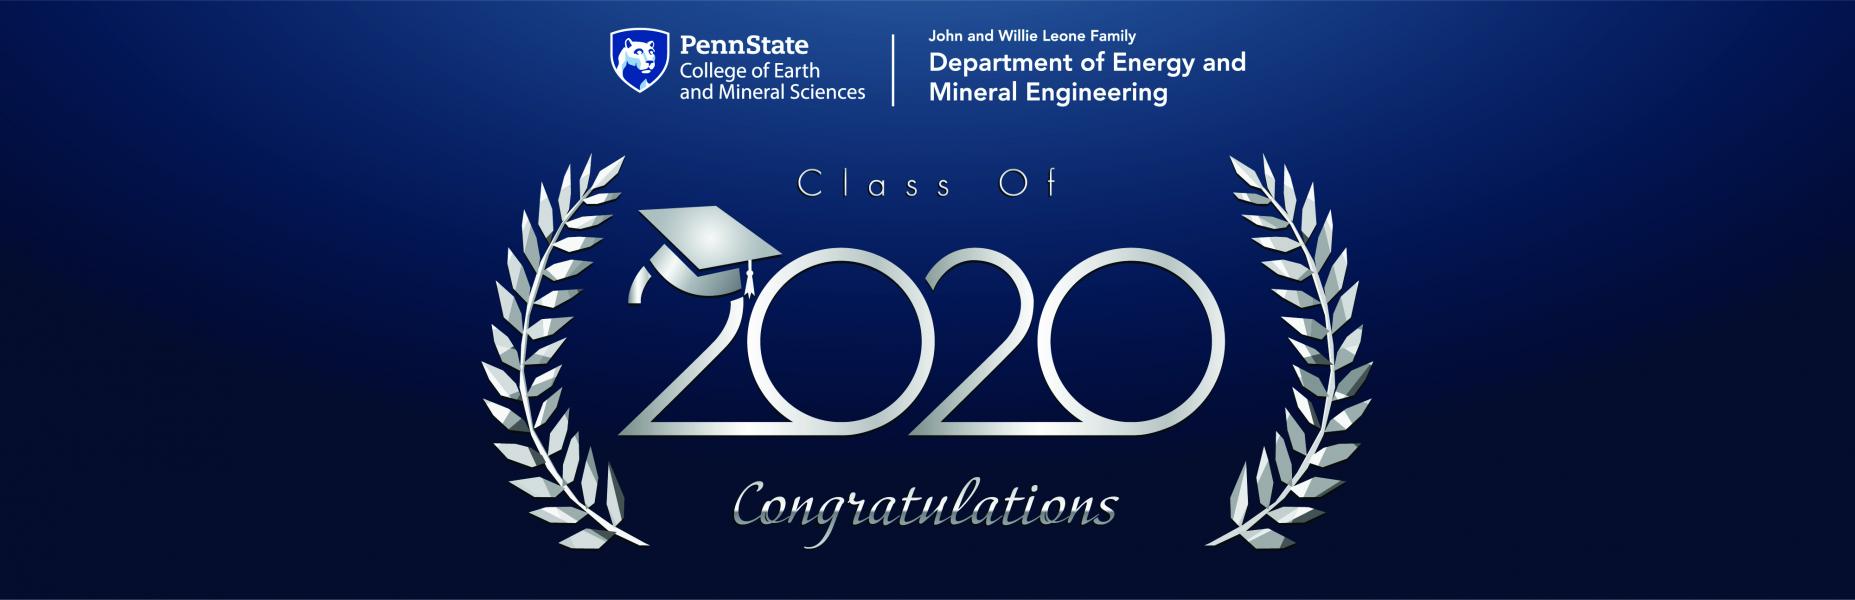 Congratulations Class of 2020 image